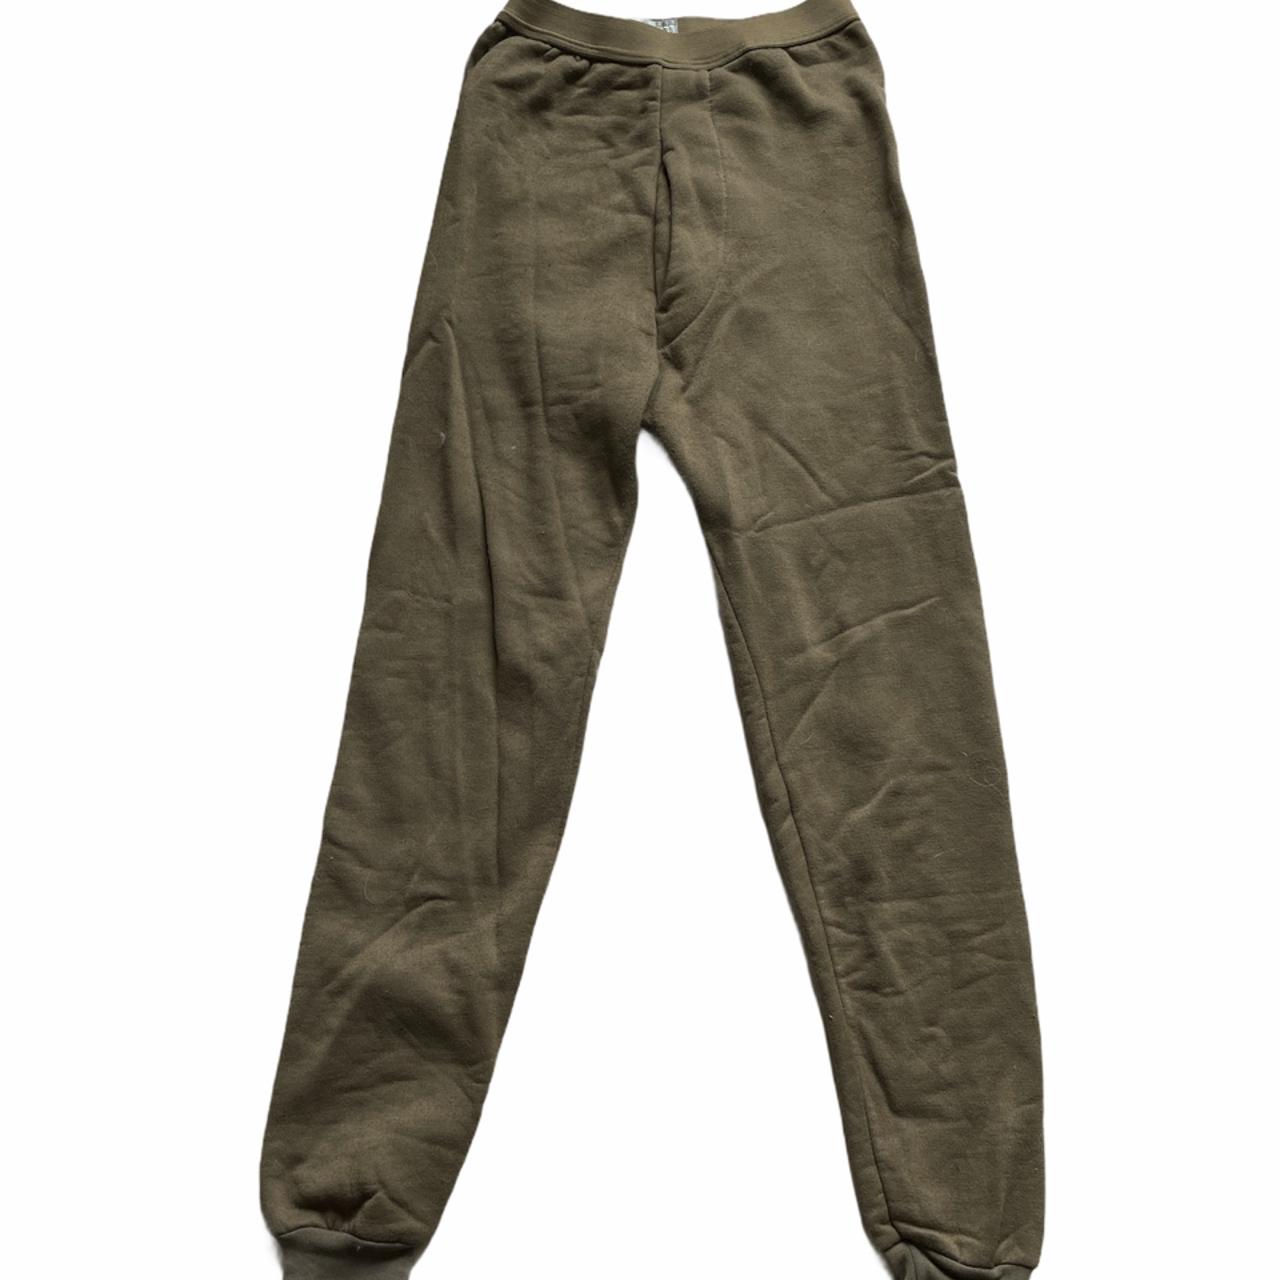 Vintage Military Army Sweatpants . Long Johns. Worn... - Depop